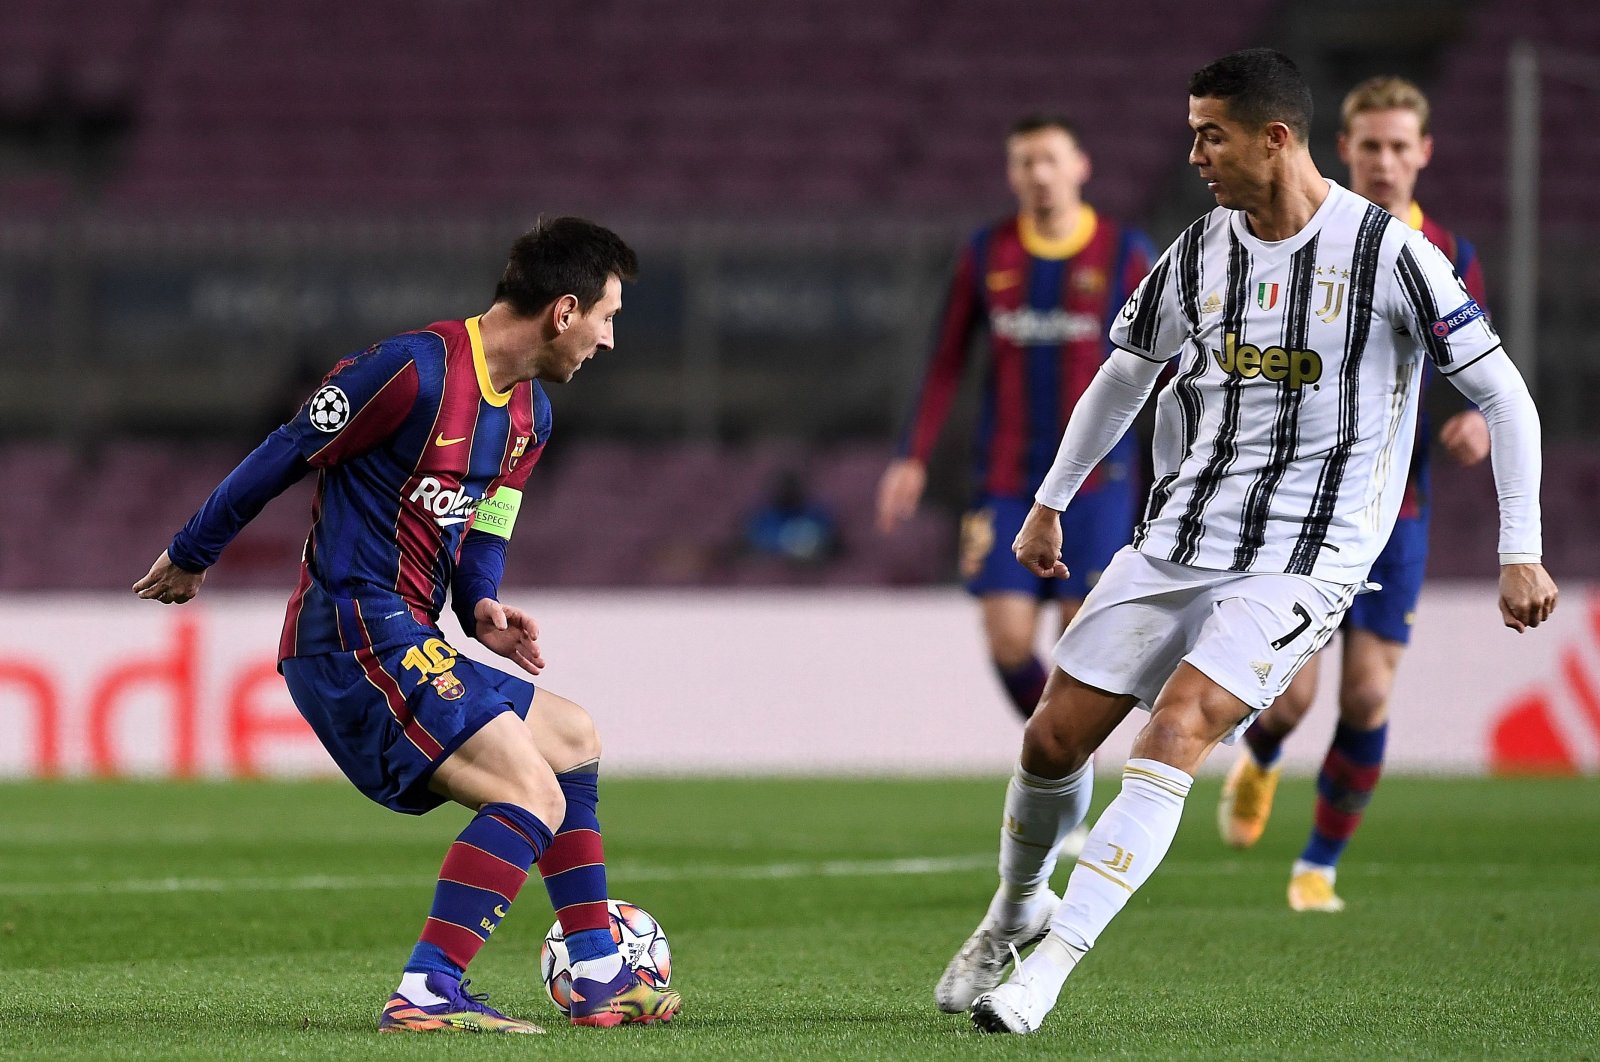 Saudi business mogul bids $2.6M for Ronaldo-Messi ticket